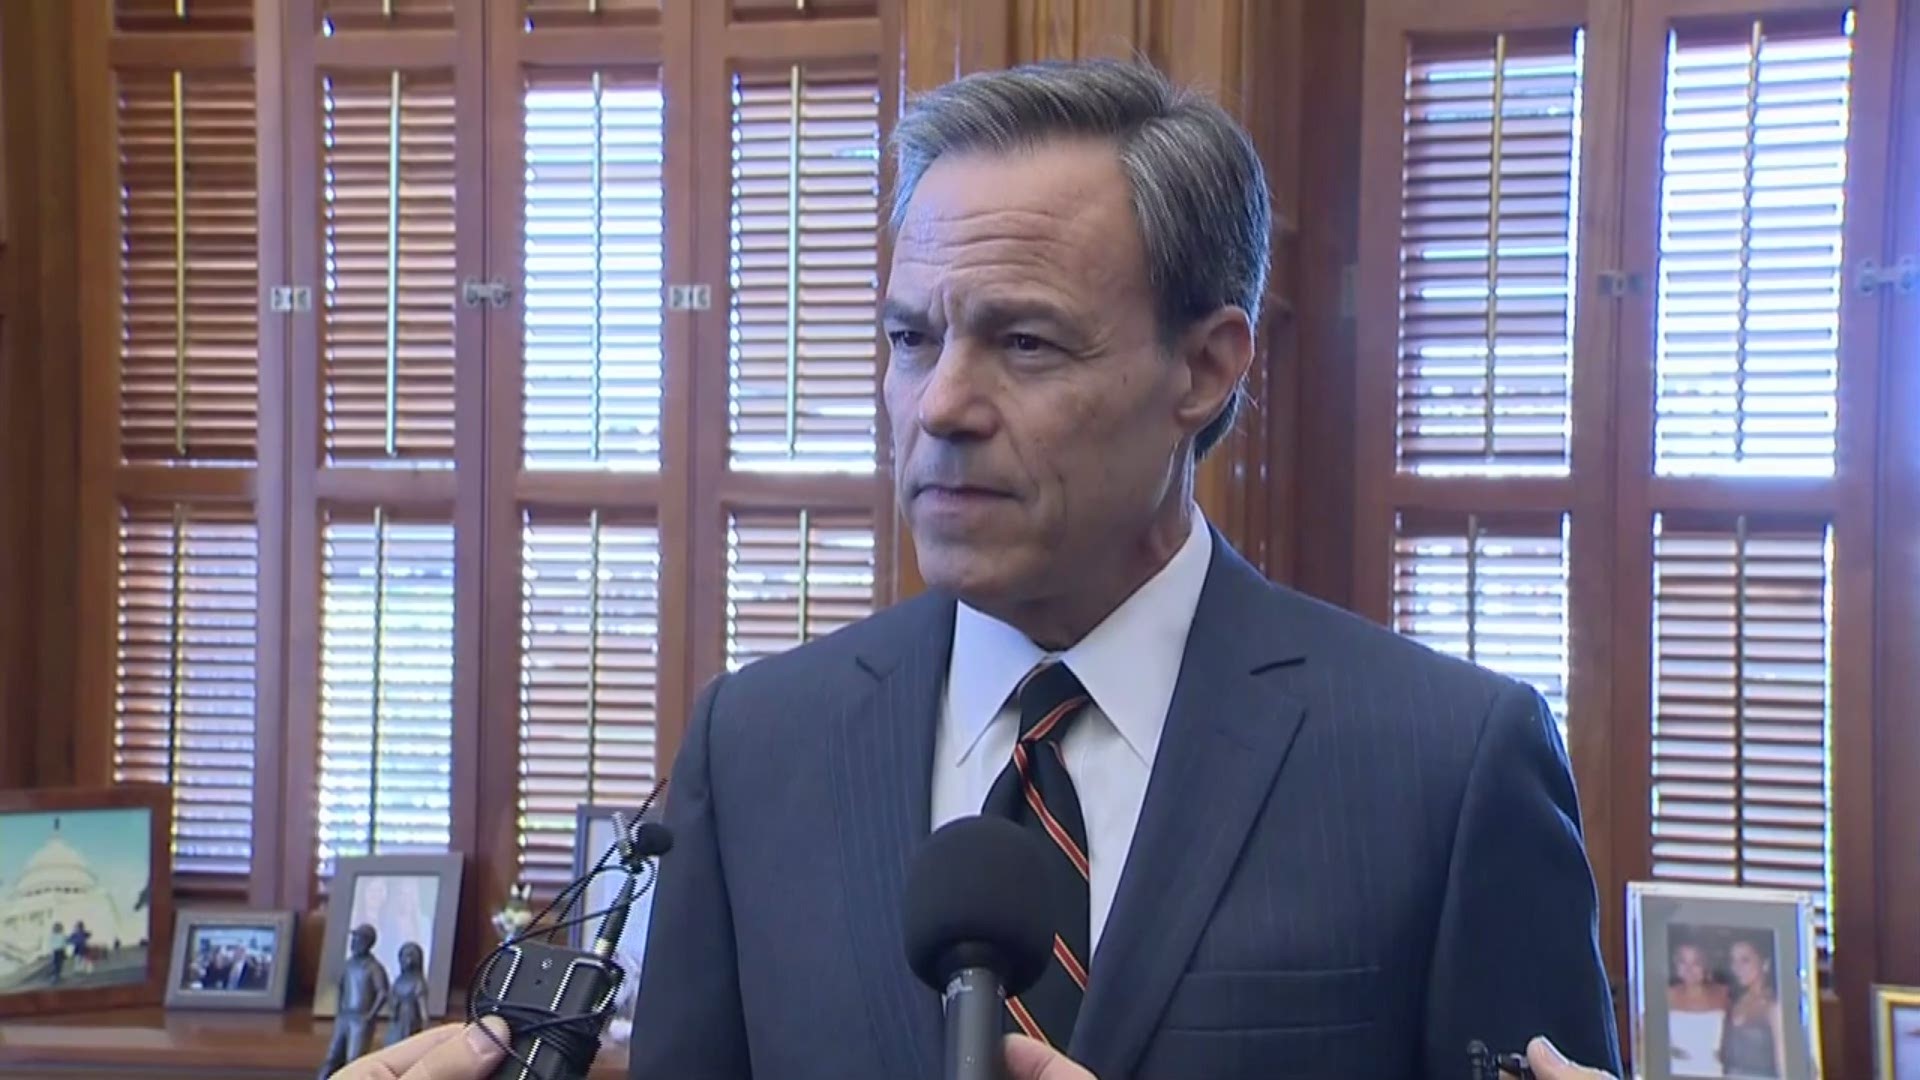 Texas House Speaker Joe Straus speaks after announcing he would not seek re-election.